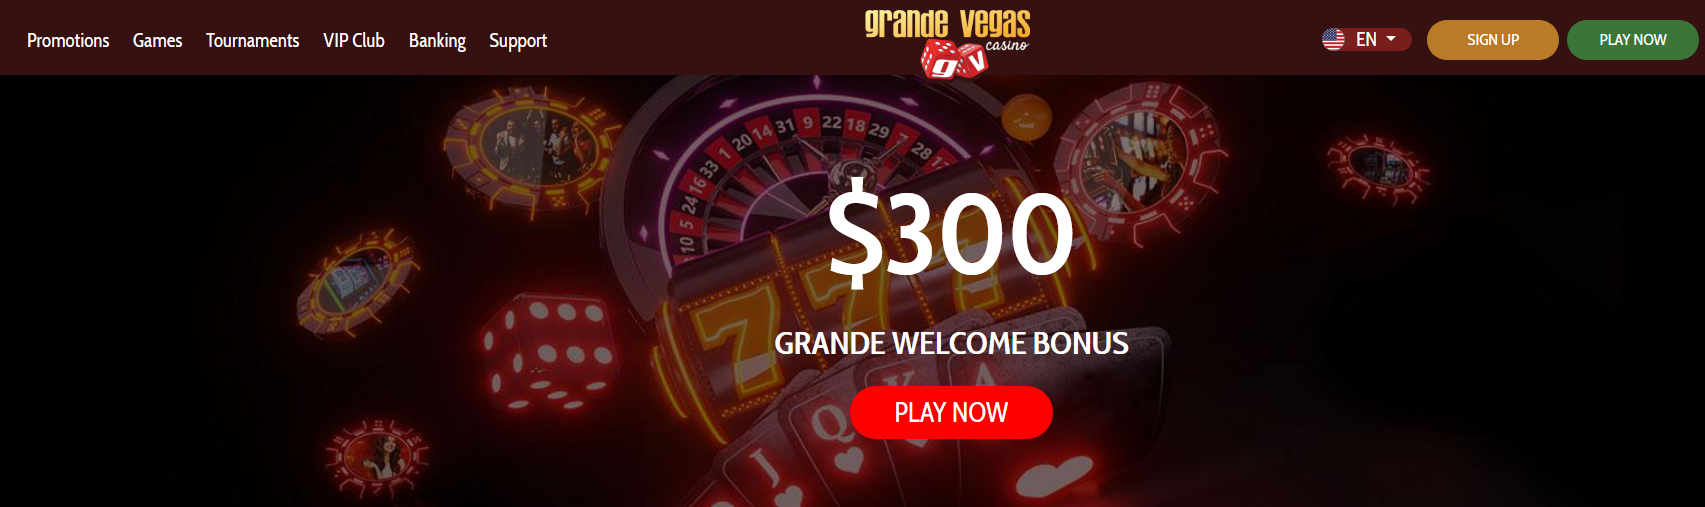 $300
                                        Grande Welcome Bonus